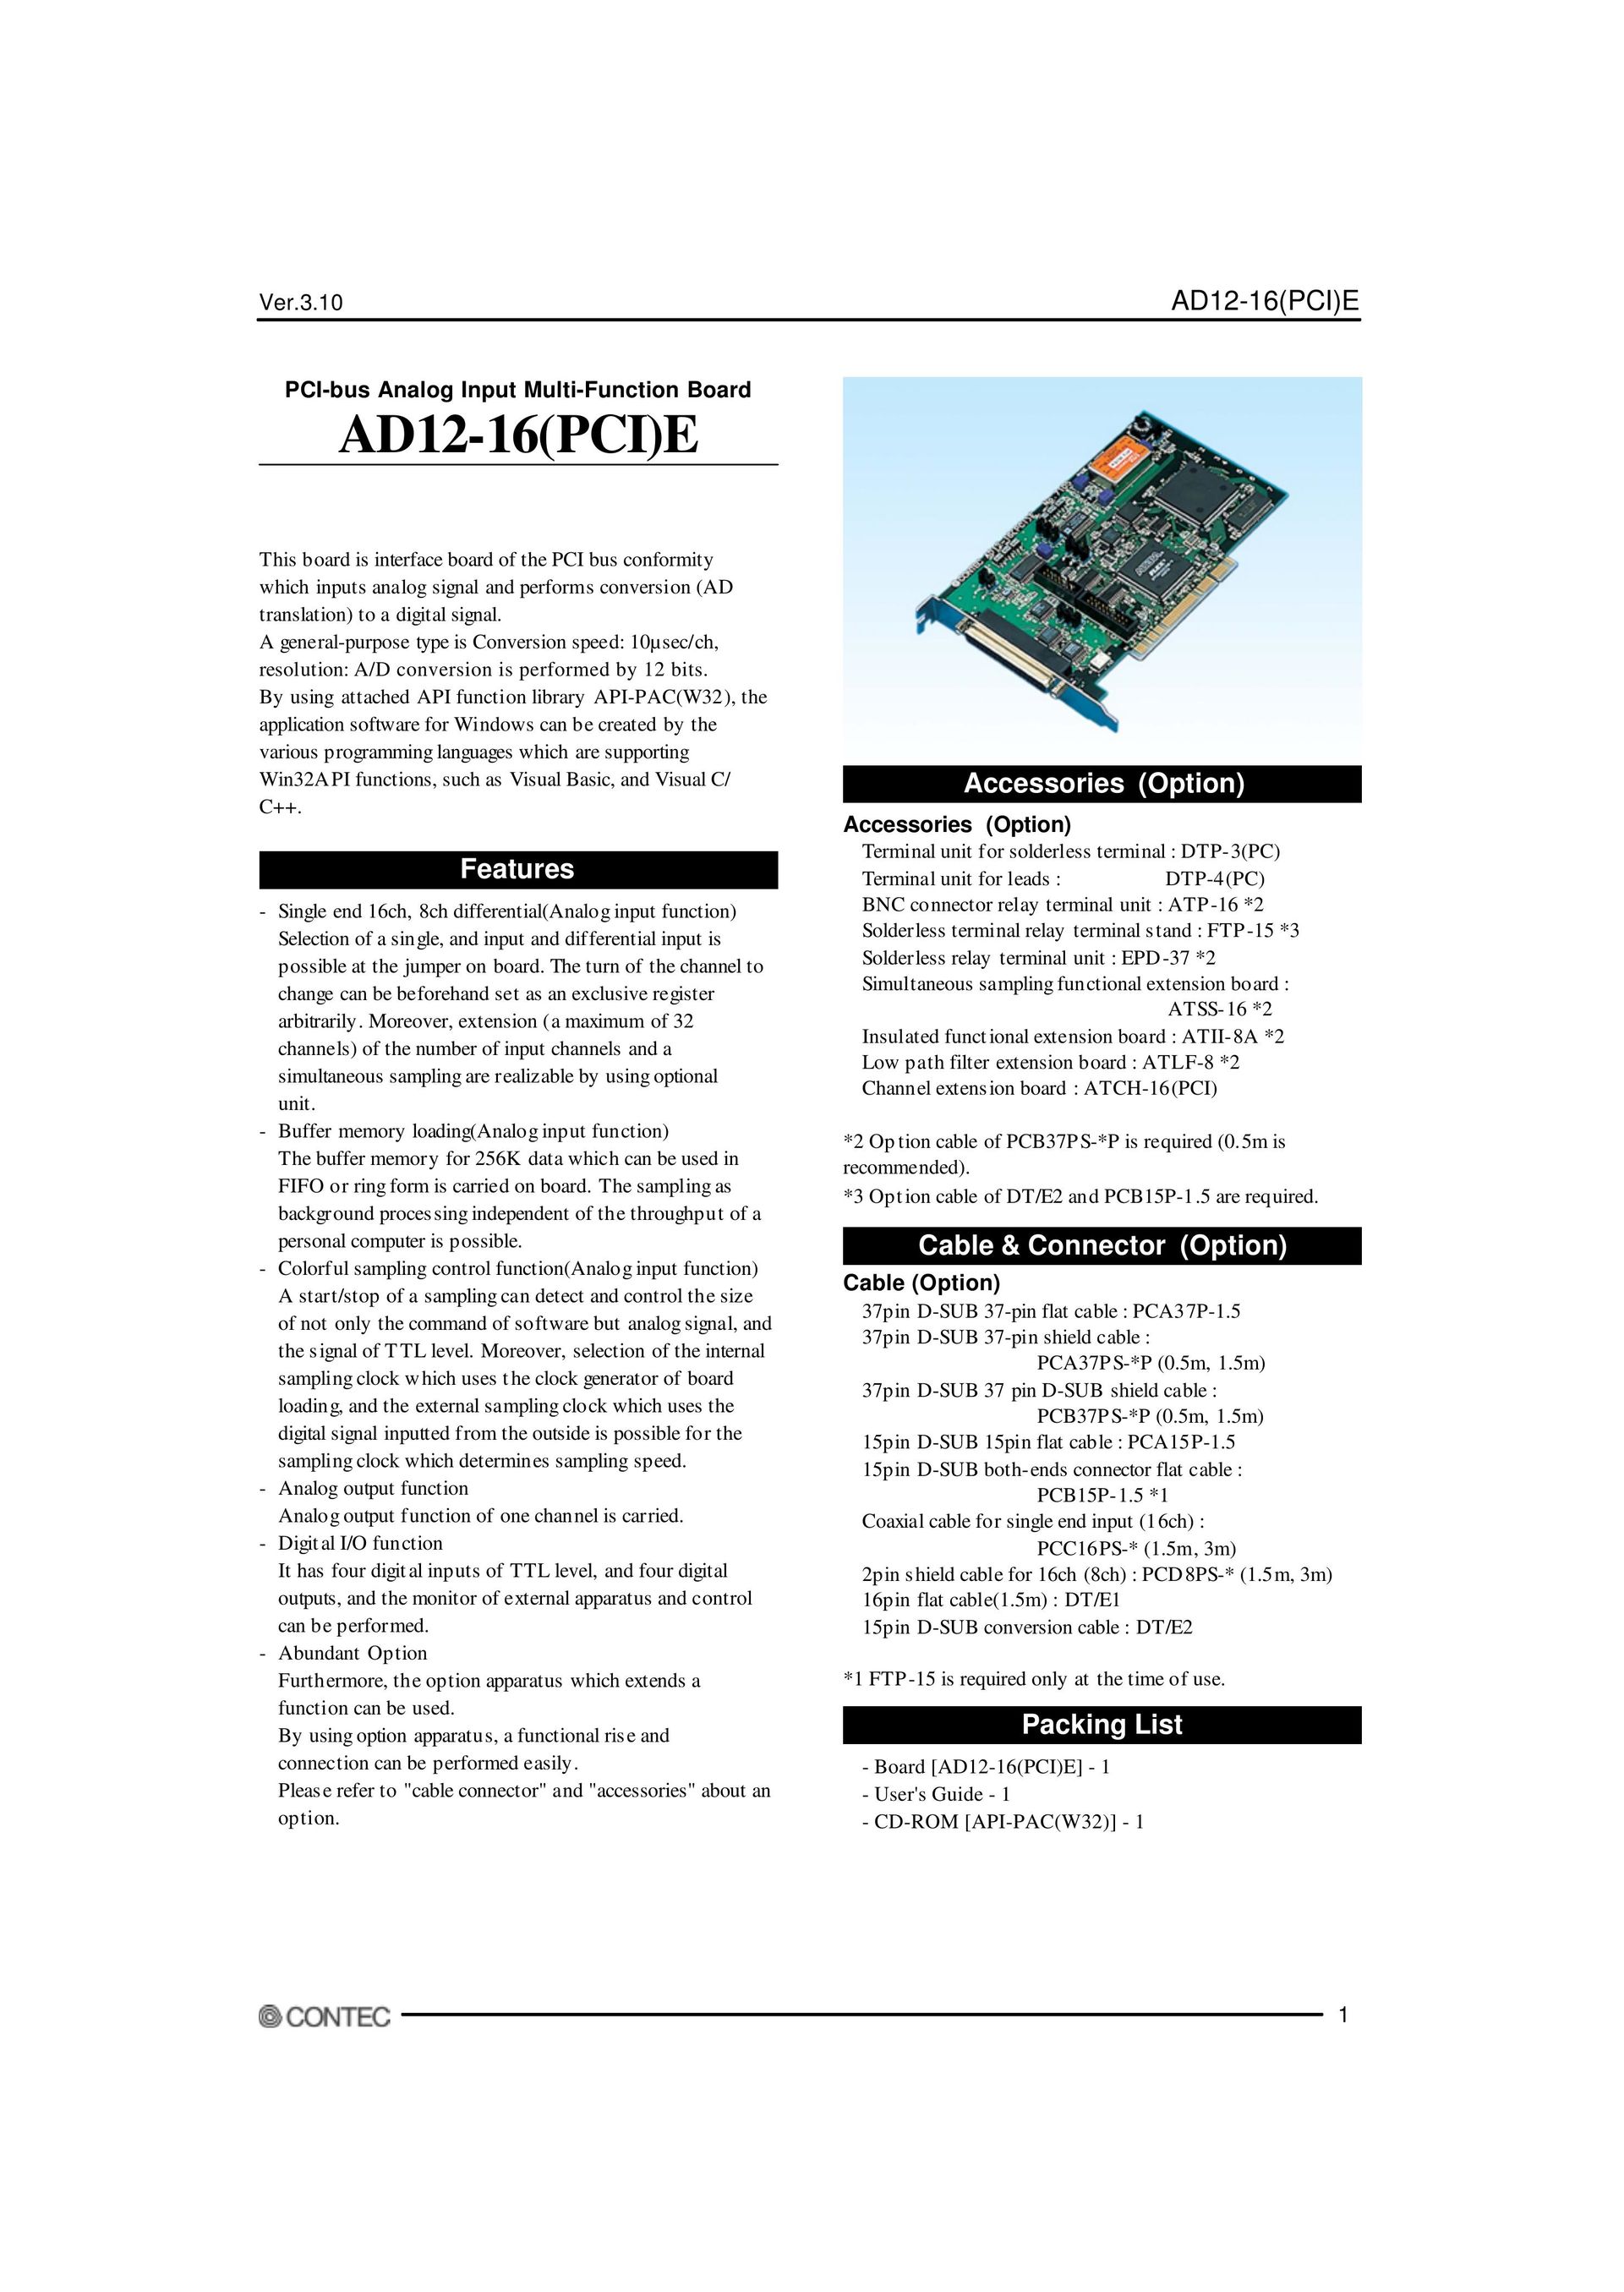 Contec AD12-16PCIE Computer Hardware User Manual